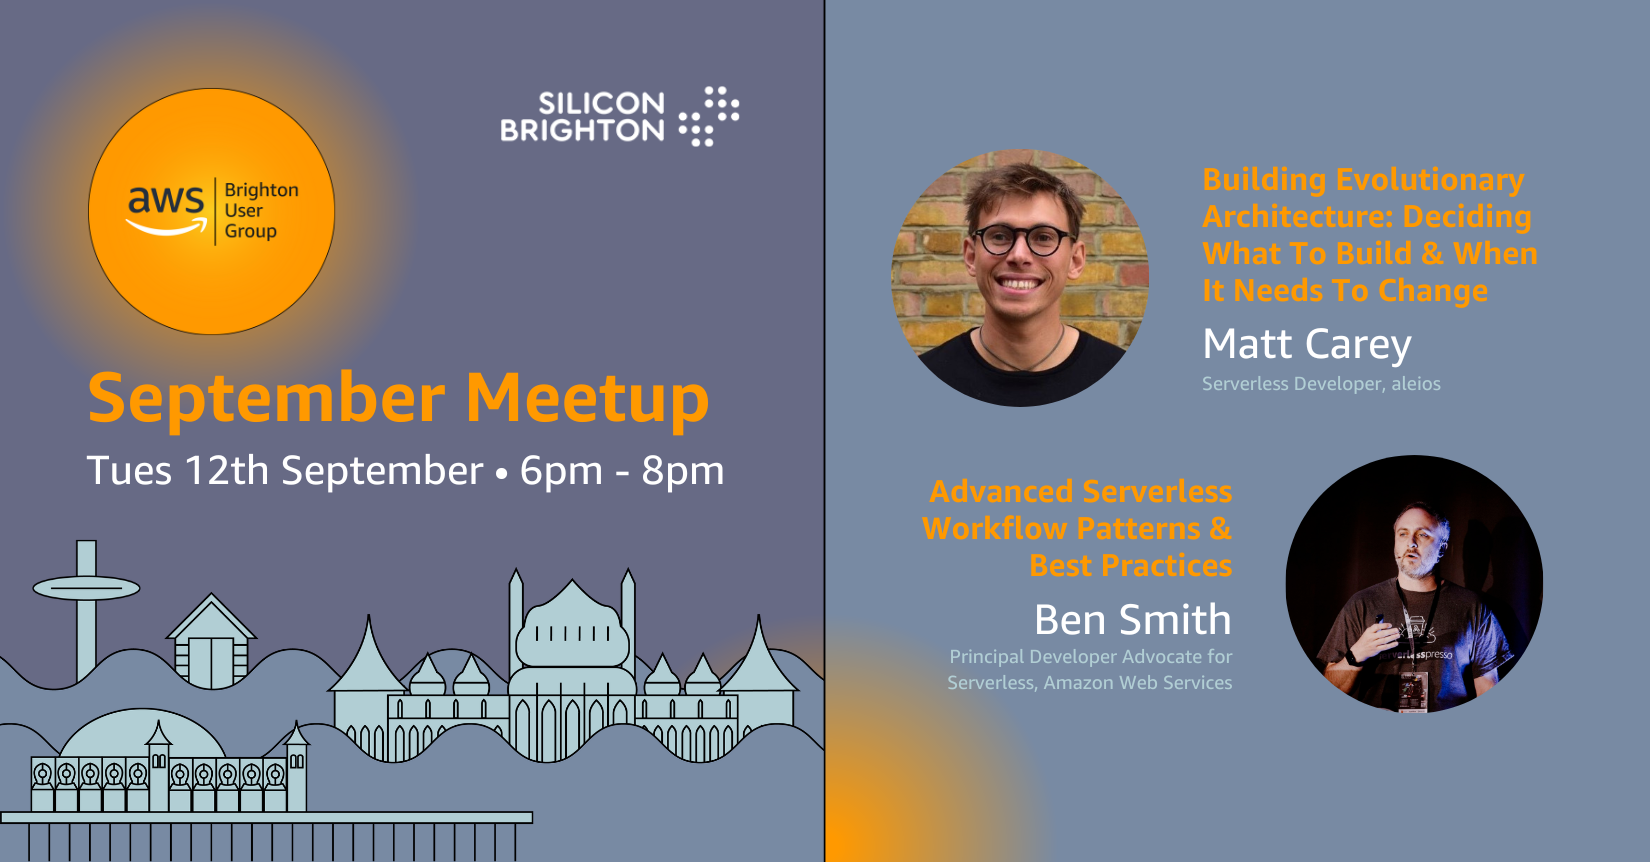 AWS Brighton User Group: September Meetup